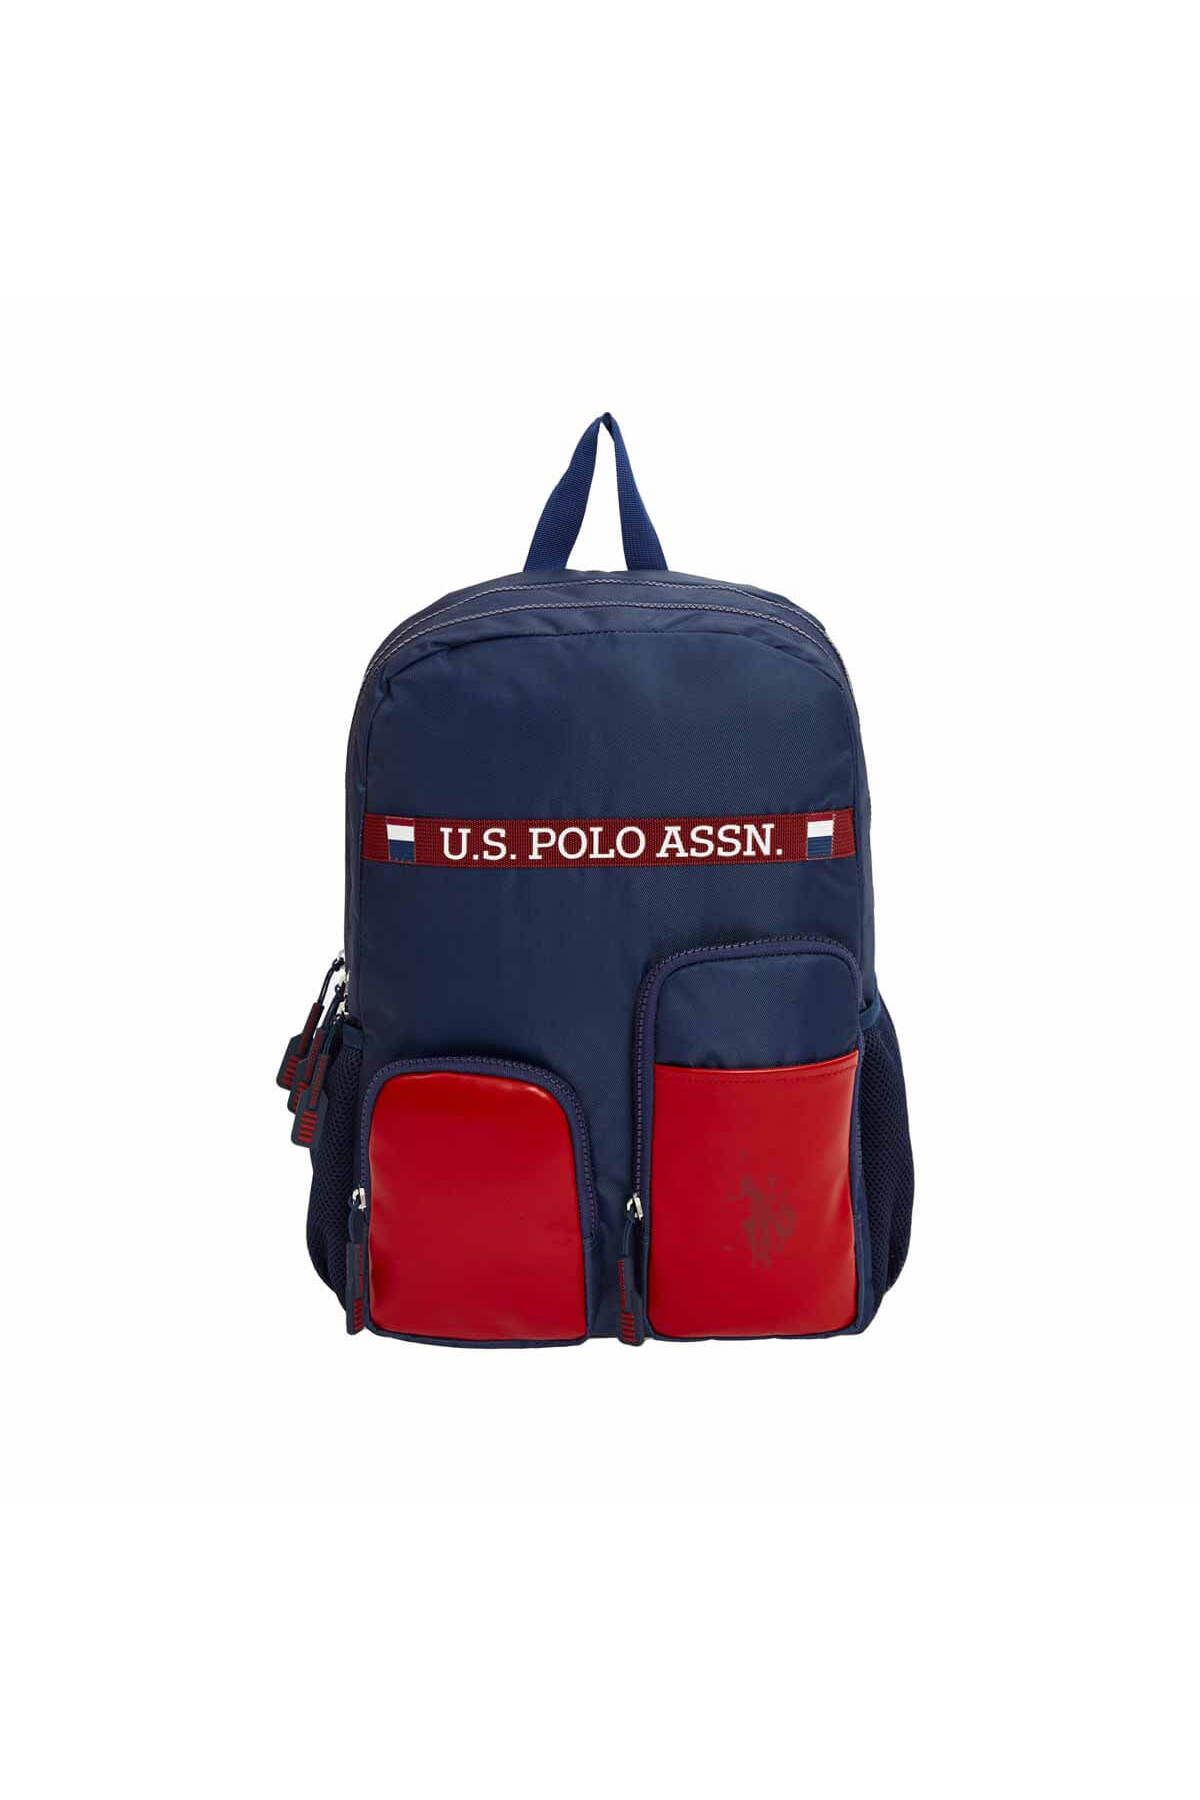 U.S. Polo Assn. US Polo Assn Lacivert Sırt Çantası PLÇAN23174